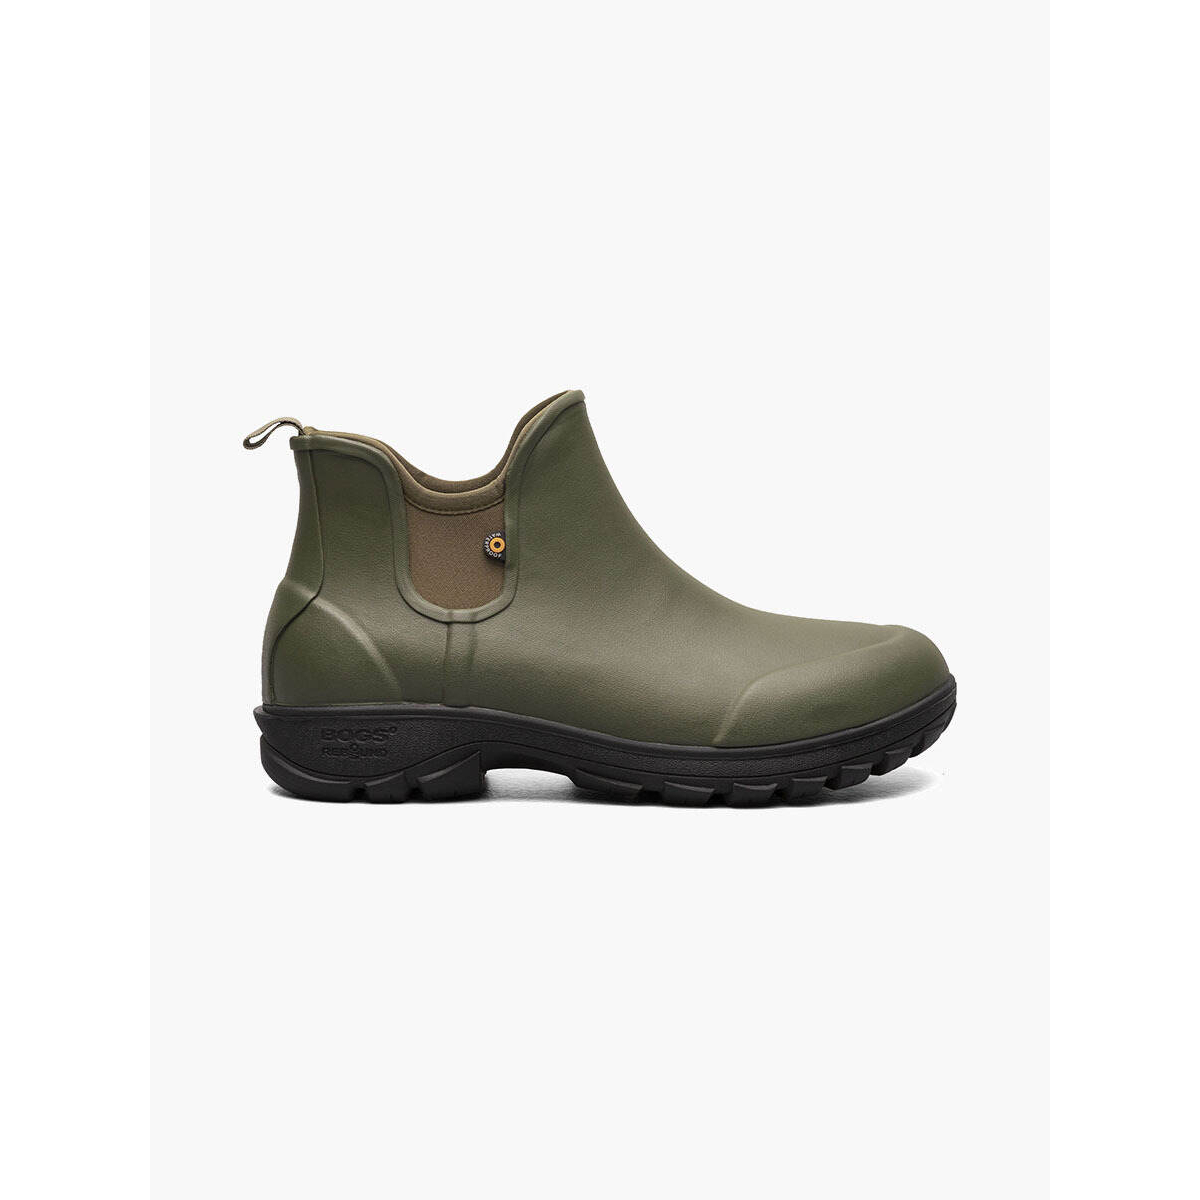 BOGS Men's Sauvie Slip On Insulated Waterproof Rain Boot Olive Multi - 72208-302 - OLIVE MLTI, 9